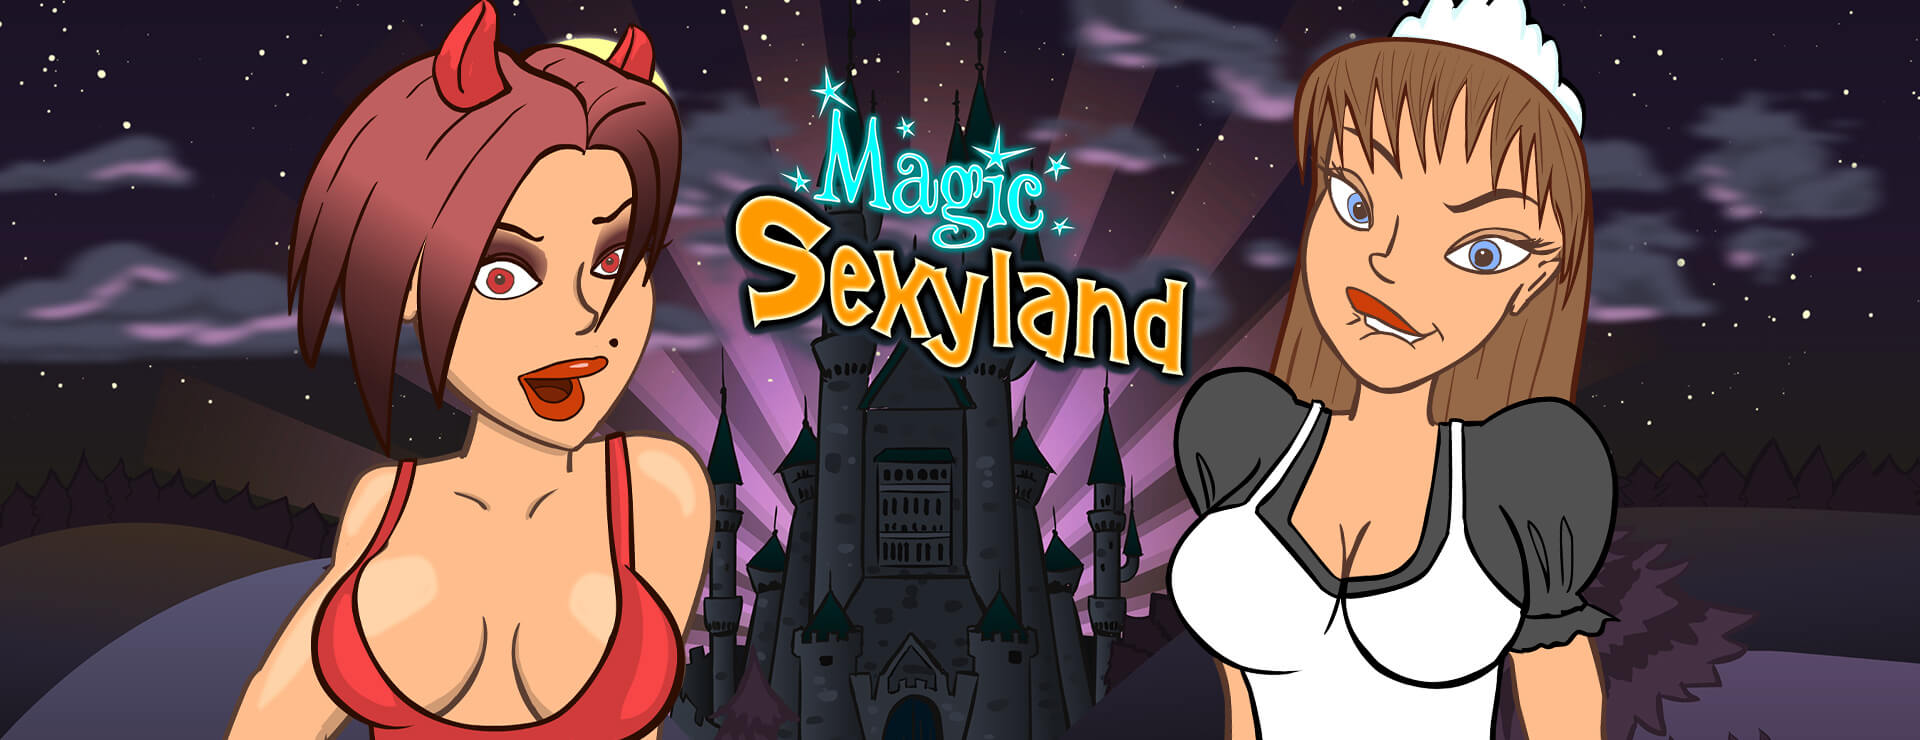 Magic Sexyland - カジュアル ゲーム